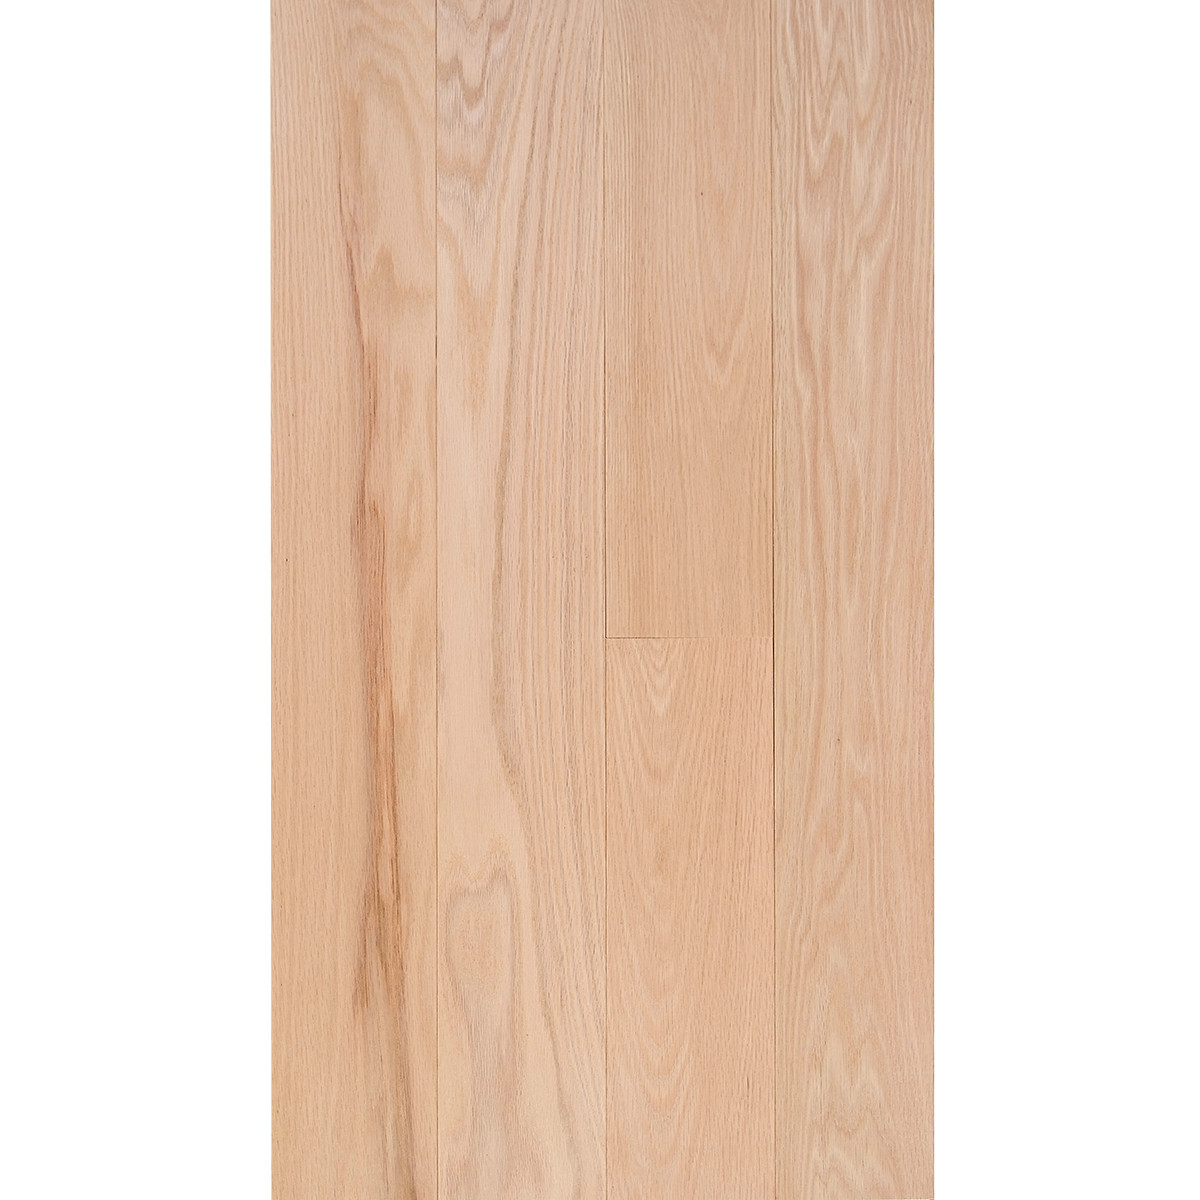 1 2 solid hardwood flooring of red oak 3 4 x 5 select grade flooring intended for fs 5 redoak select em flooring